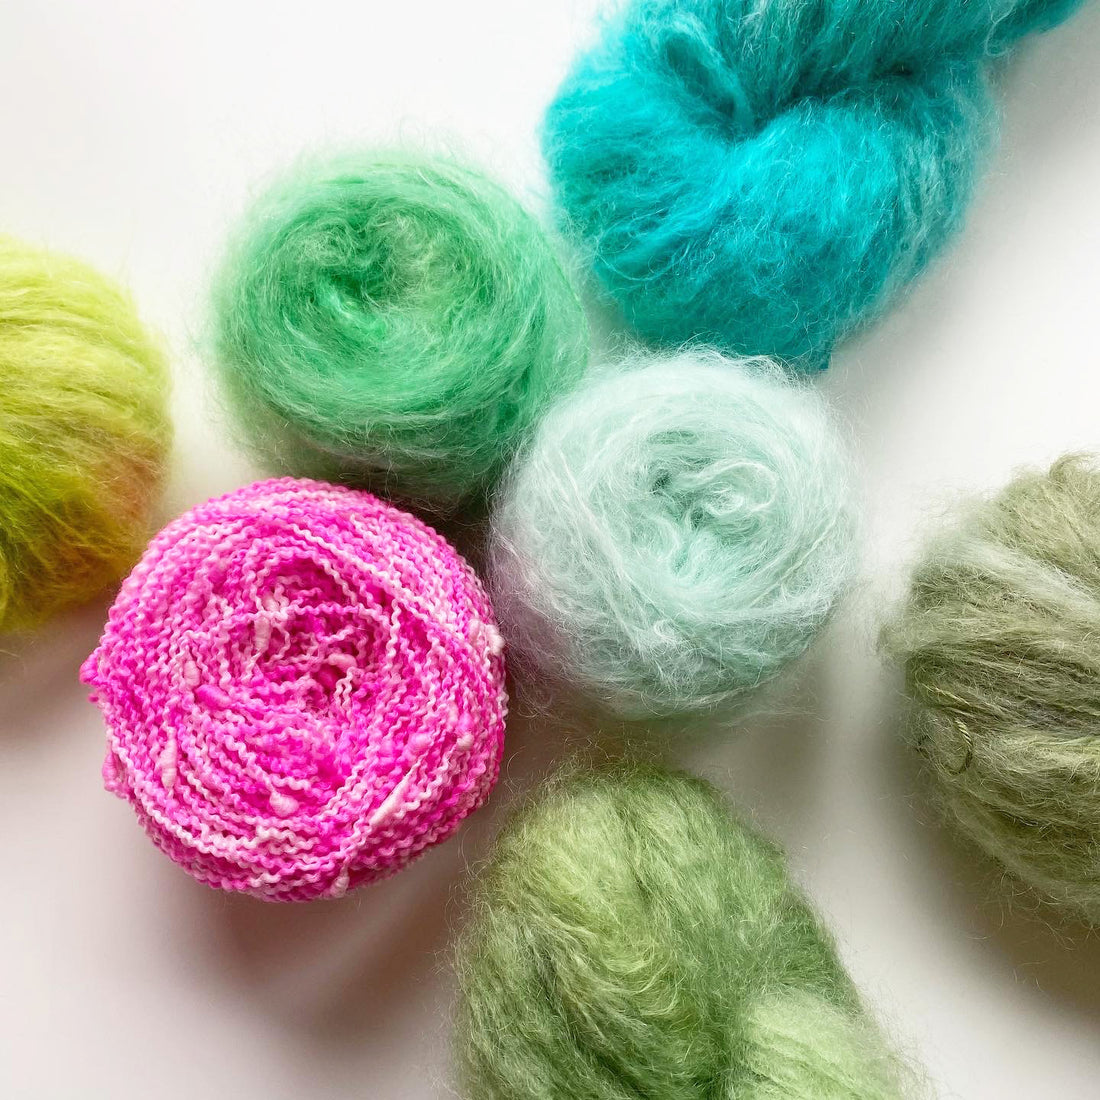 Soft Merino Wool Yarn for Hand Knitting - Medium-Fine, Perfect for